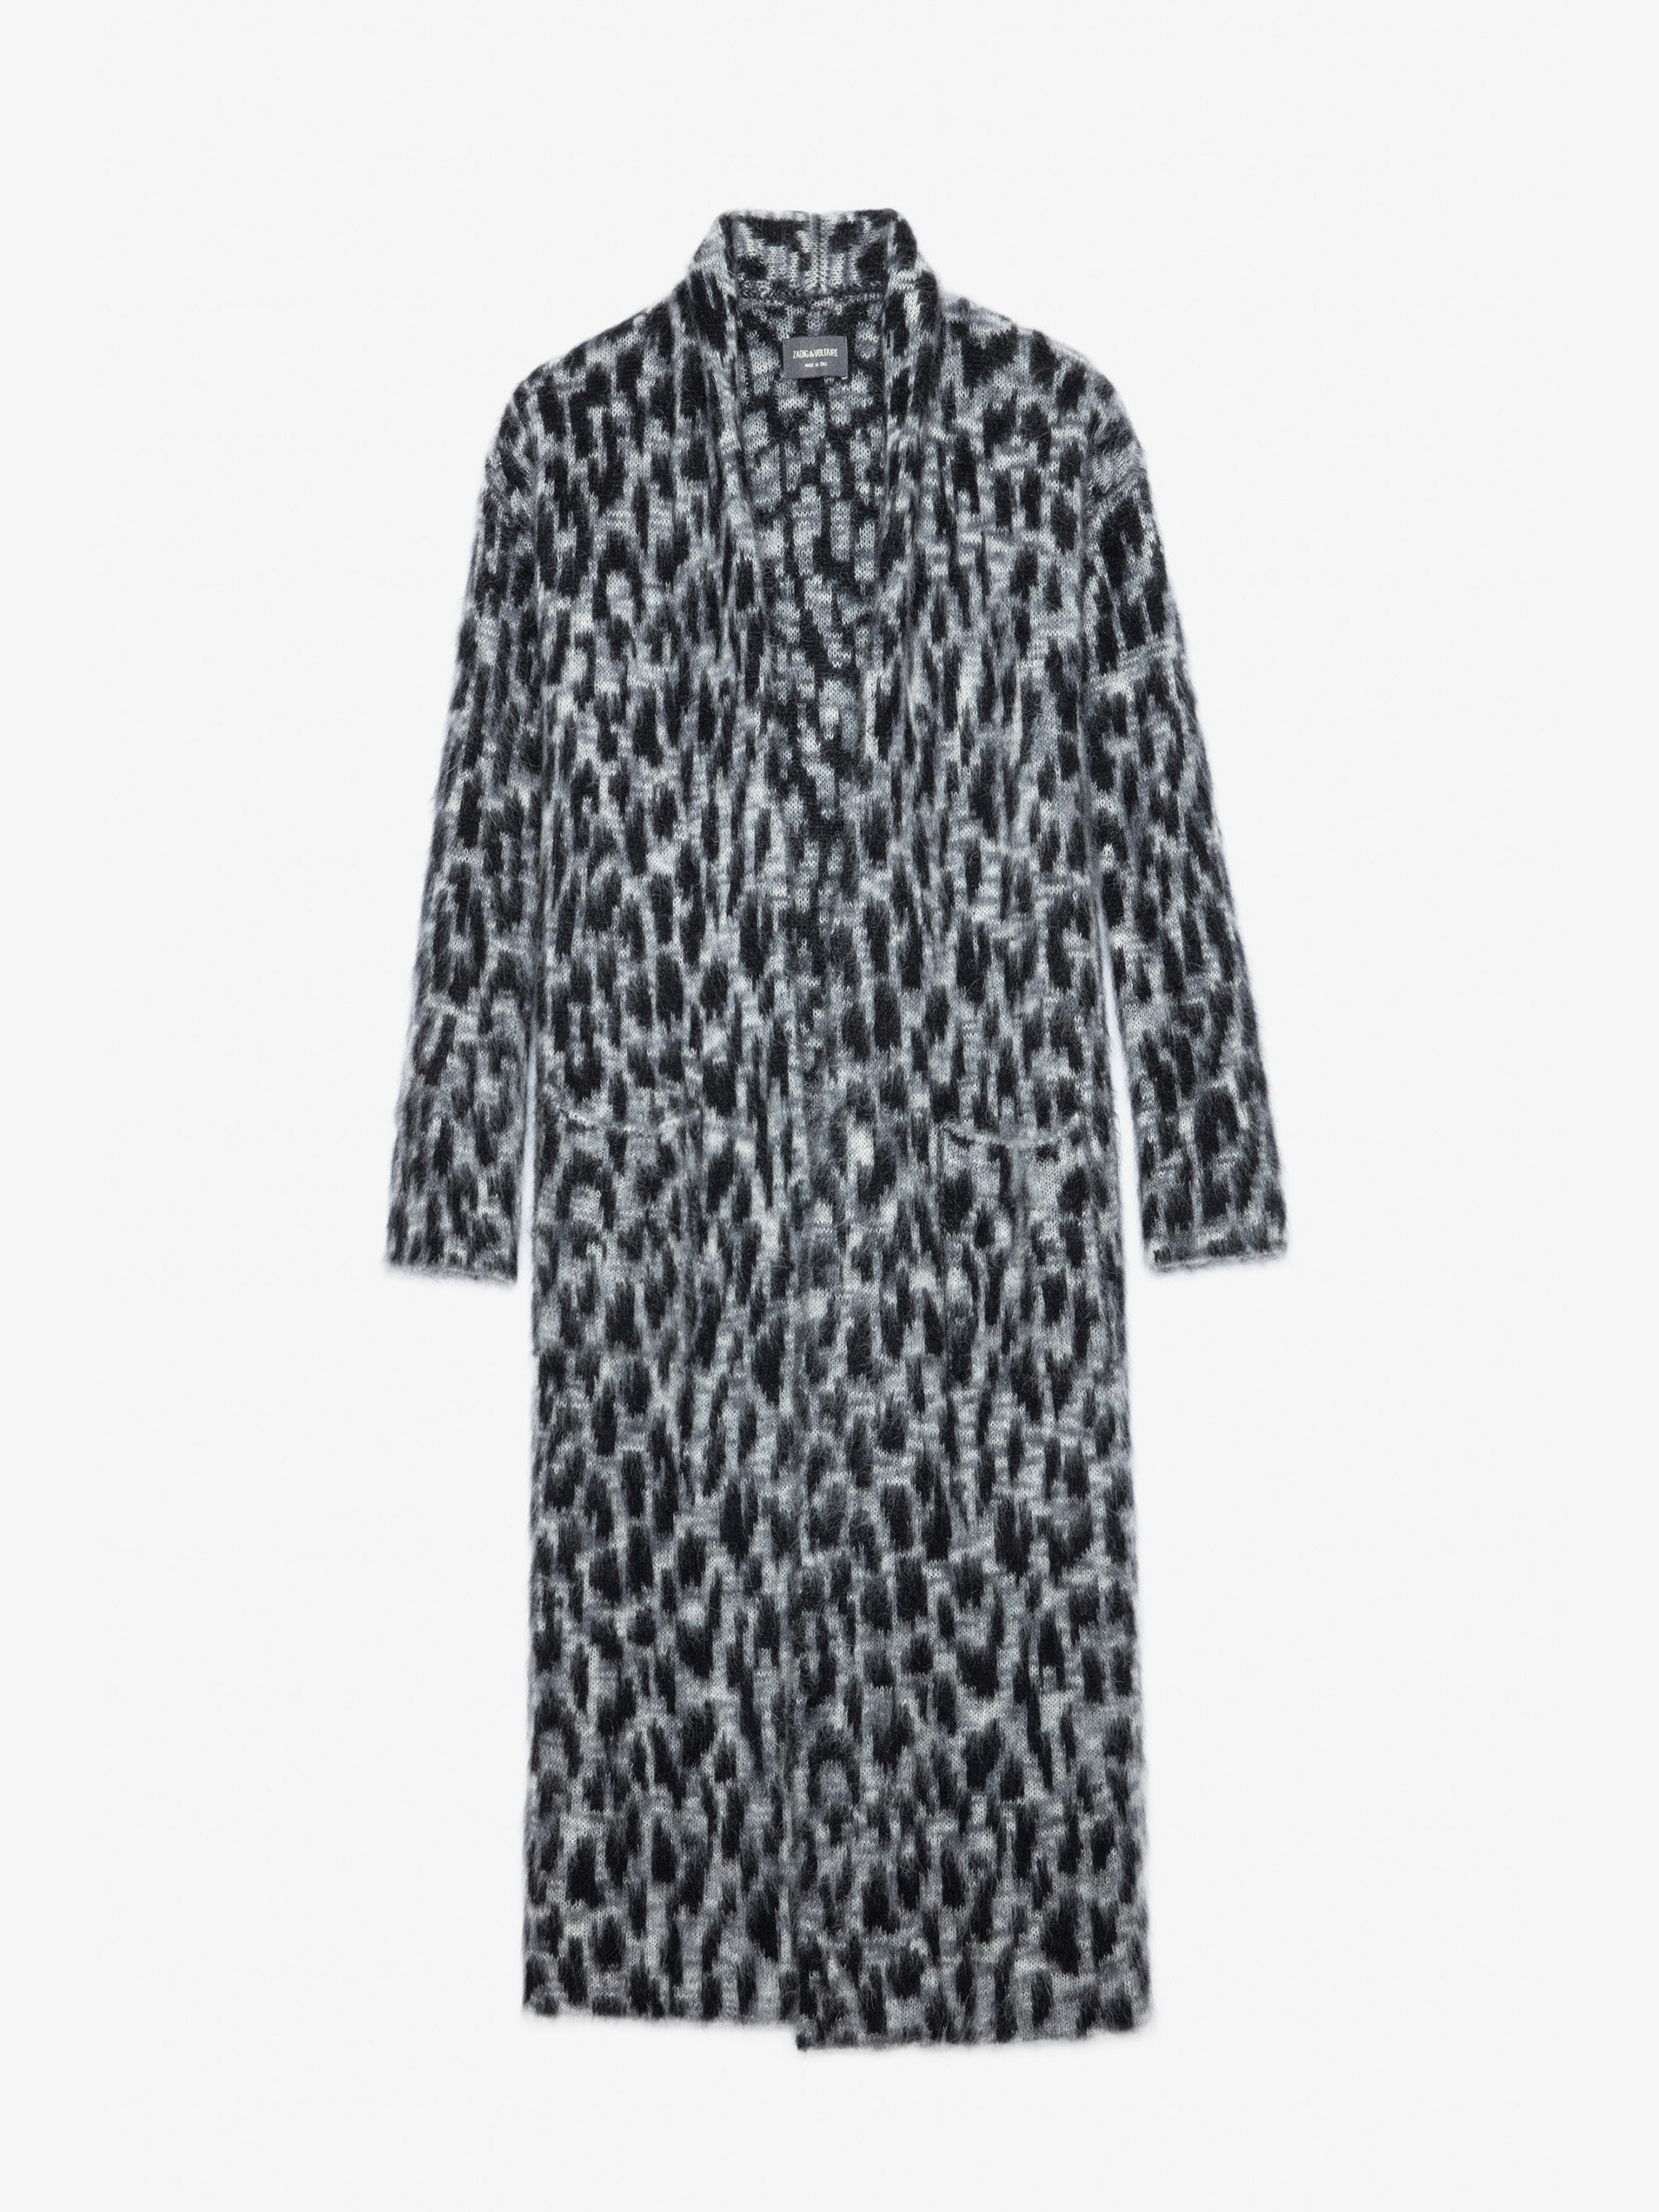 Tilda Leopard Cardigan - Women’s long line grey leopard-print cardigan.